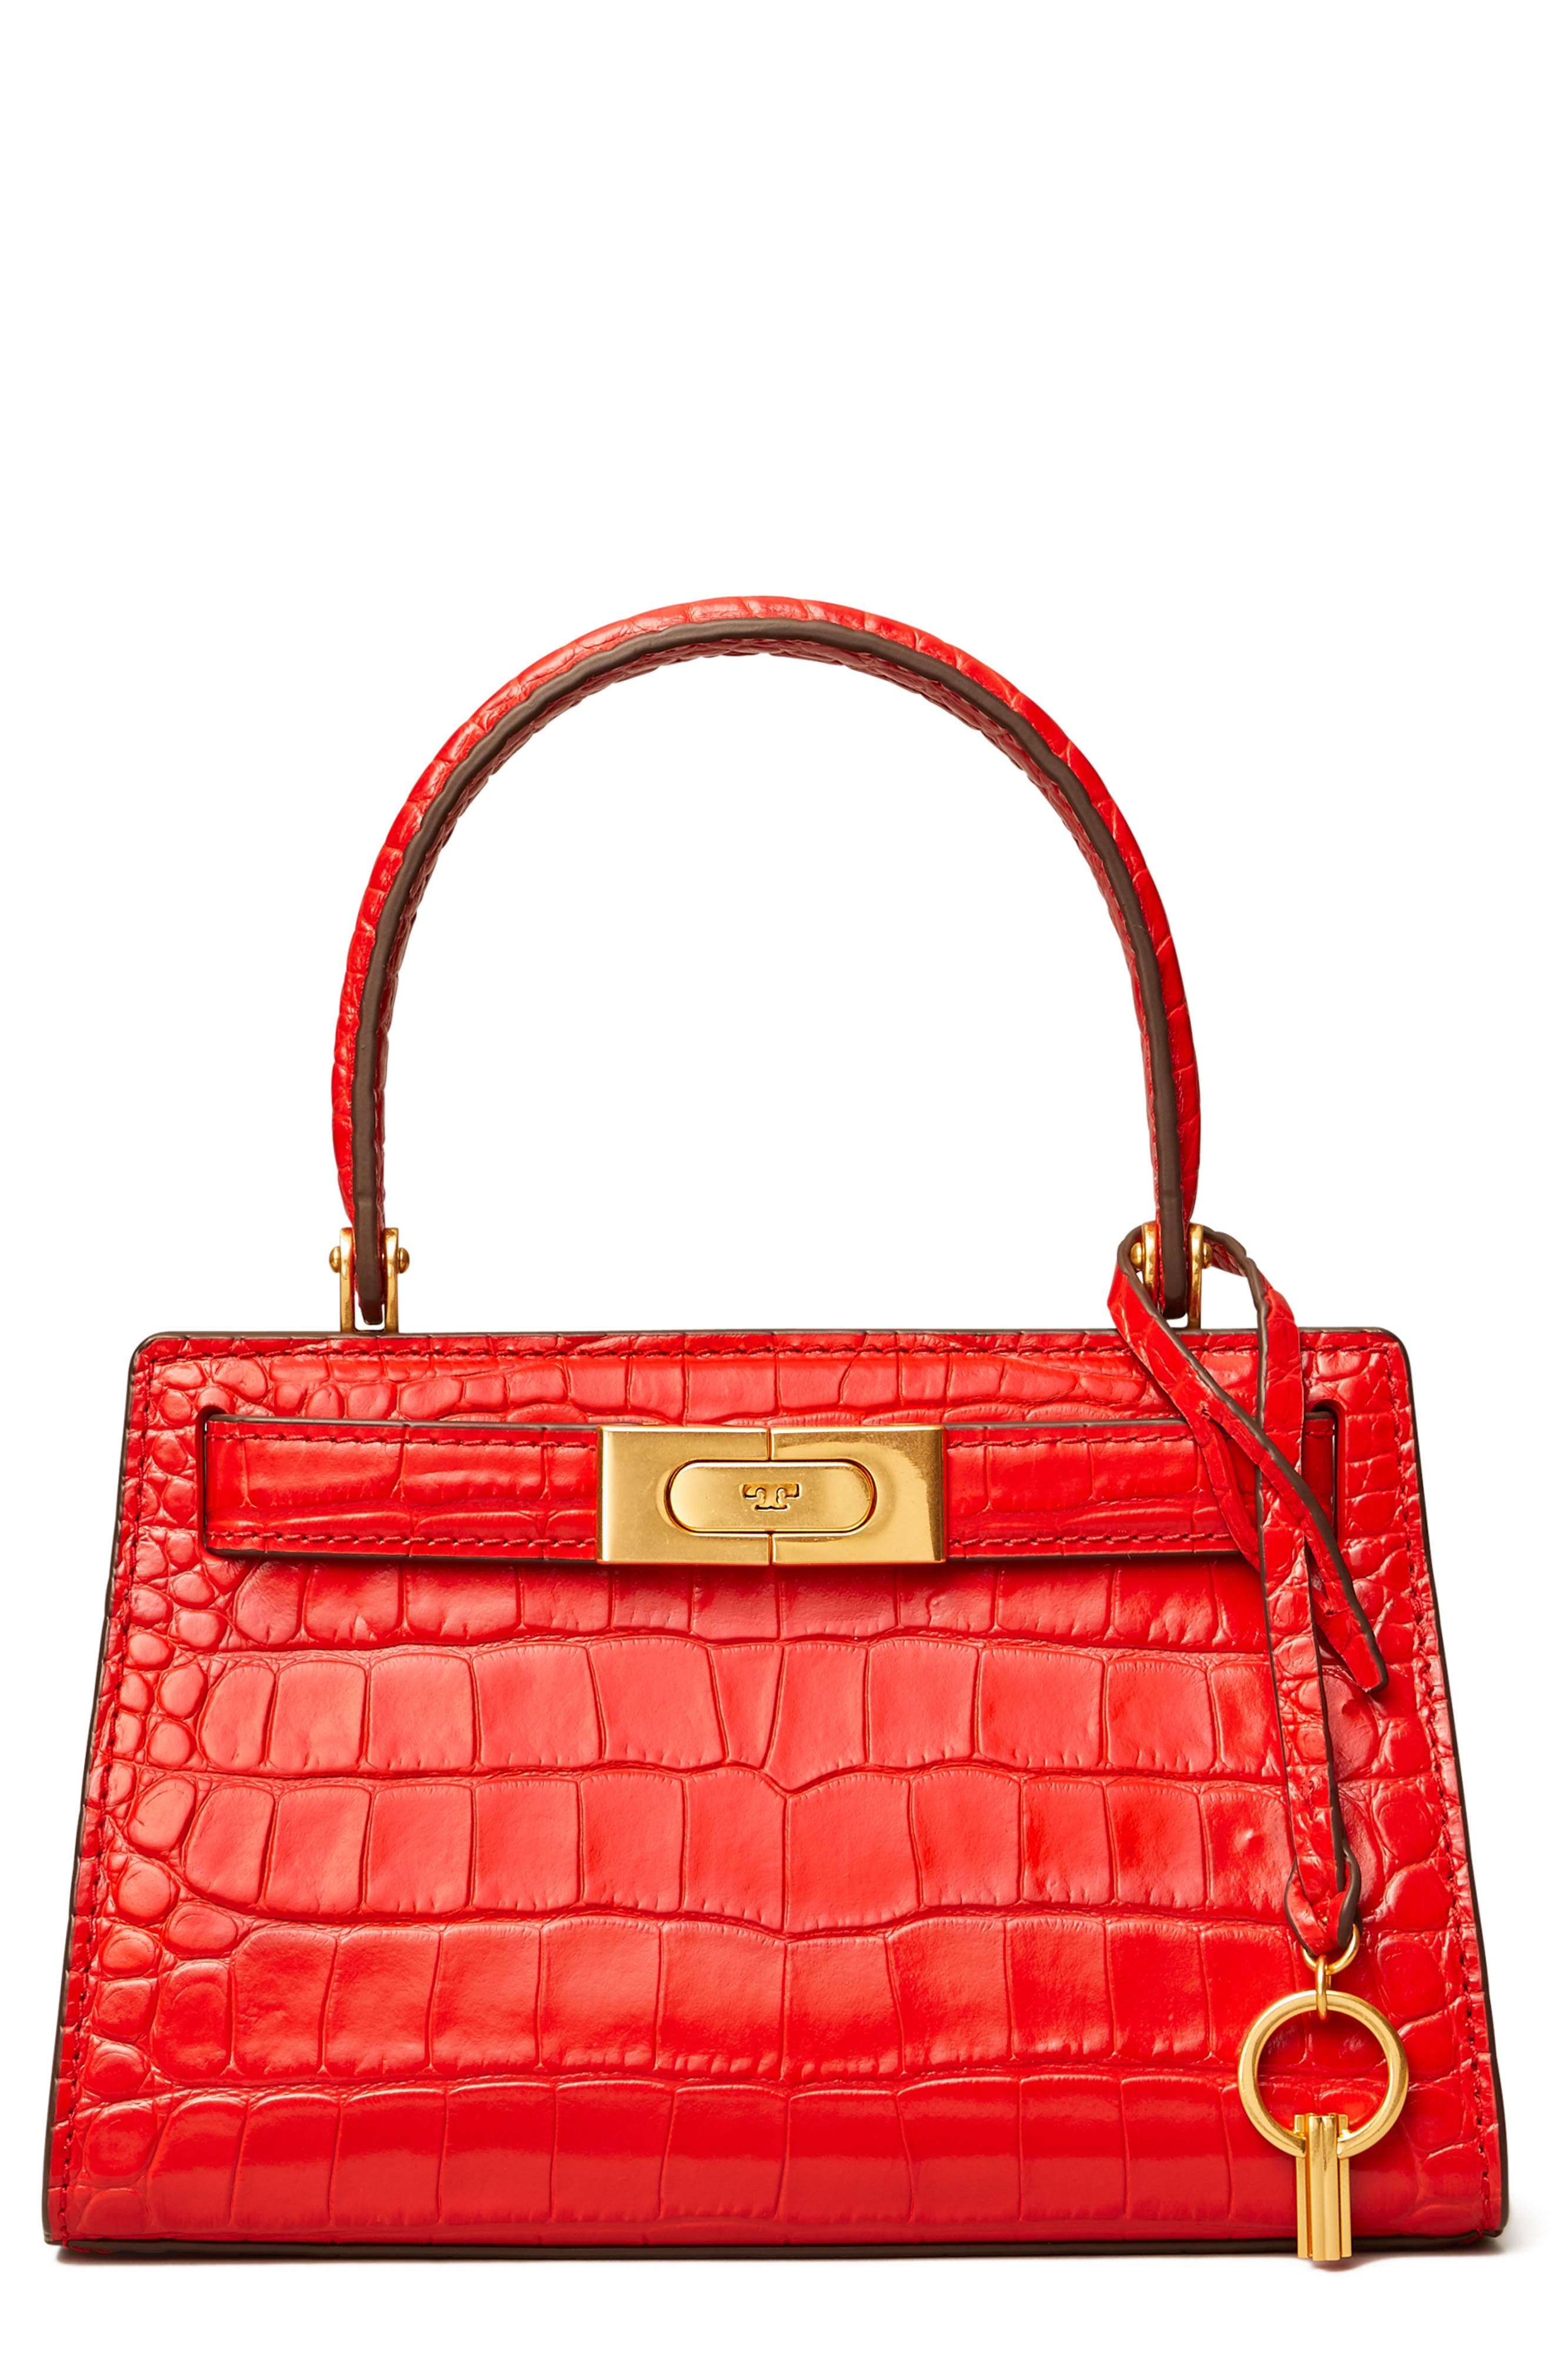 Top Designer Bags Under £1000 - Luxury Bags Under £1000 To Buy